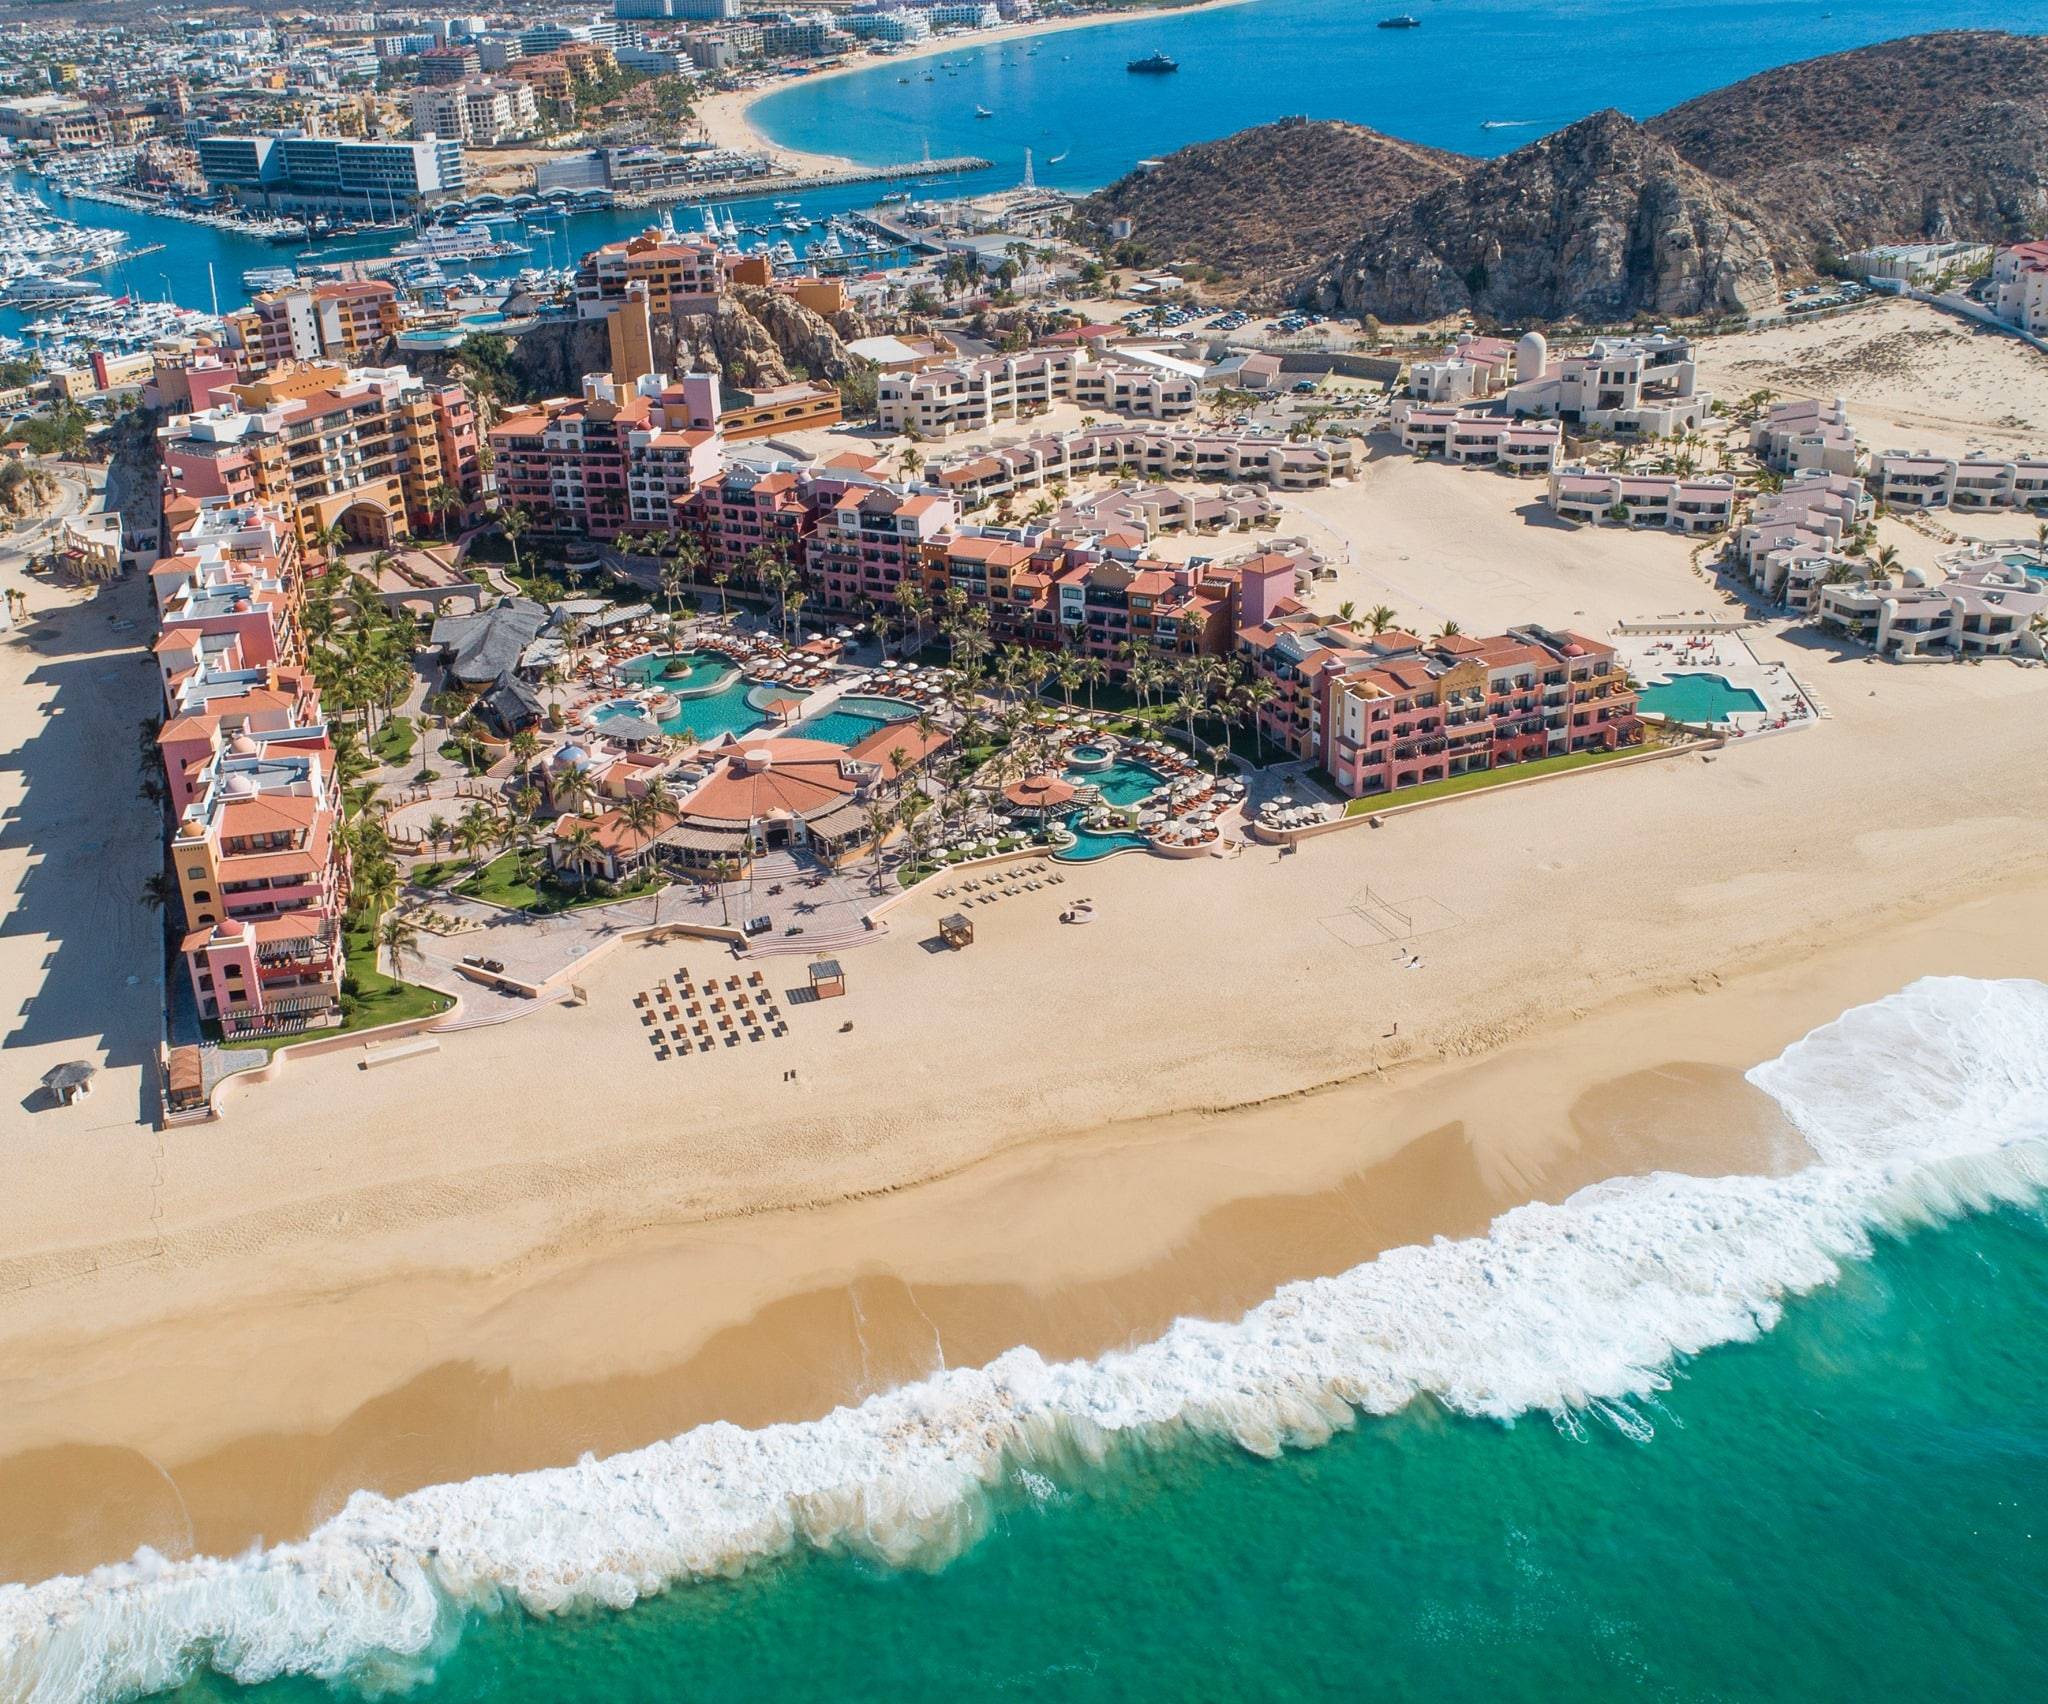 Playa Grande Resort and Spa - Top 5 Resorts in Los Cabos